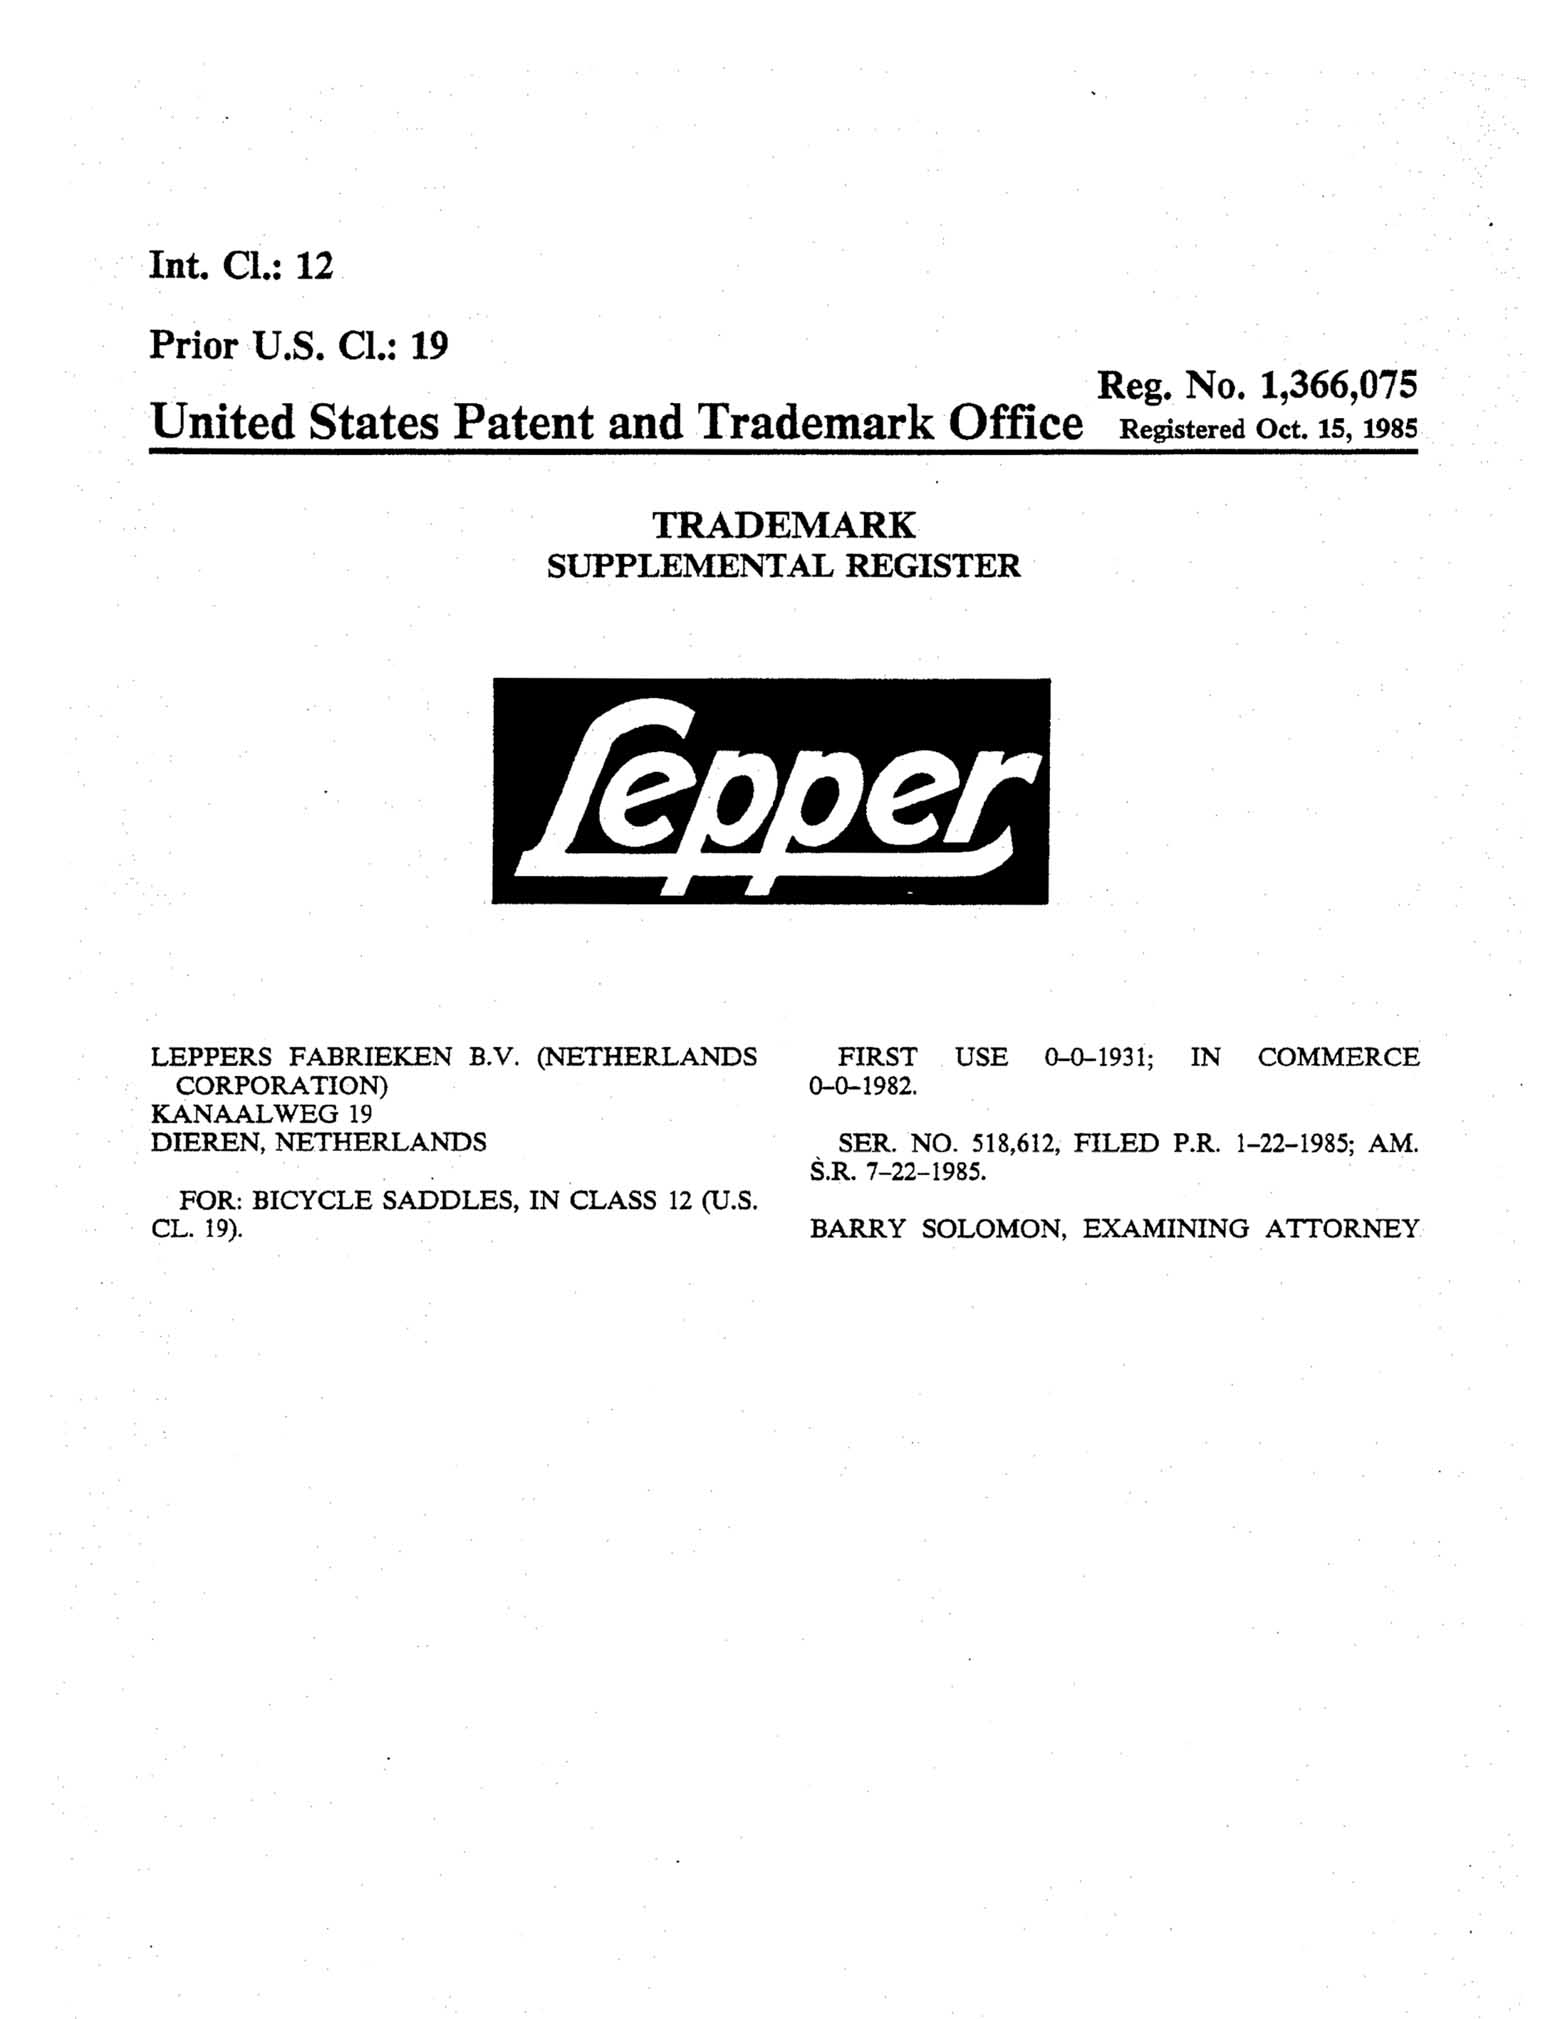 US Trademark 1,366,075 - Lepper main image